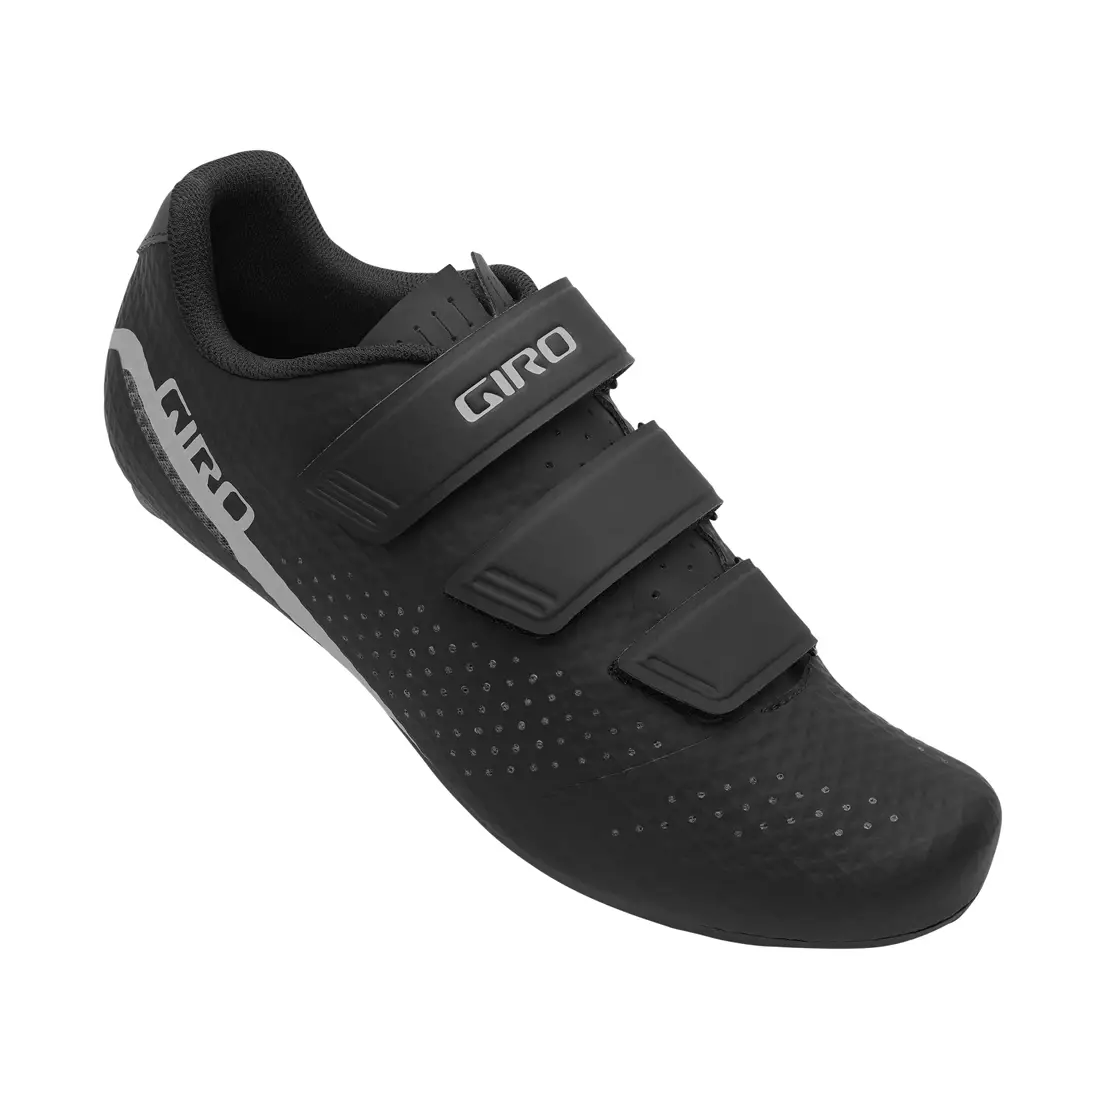 GIRO pánská cyklistická obuv STYLUS black  